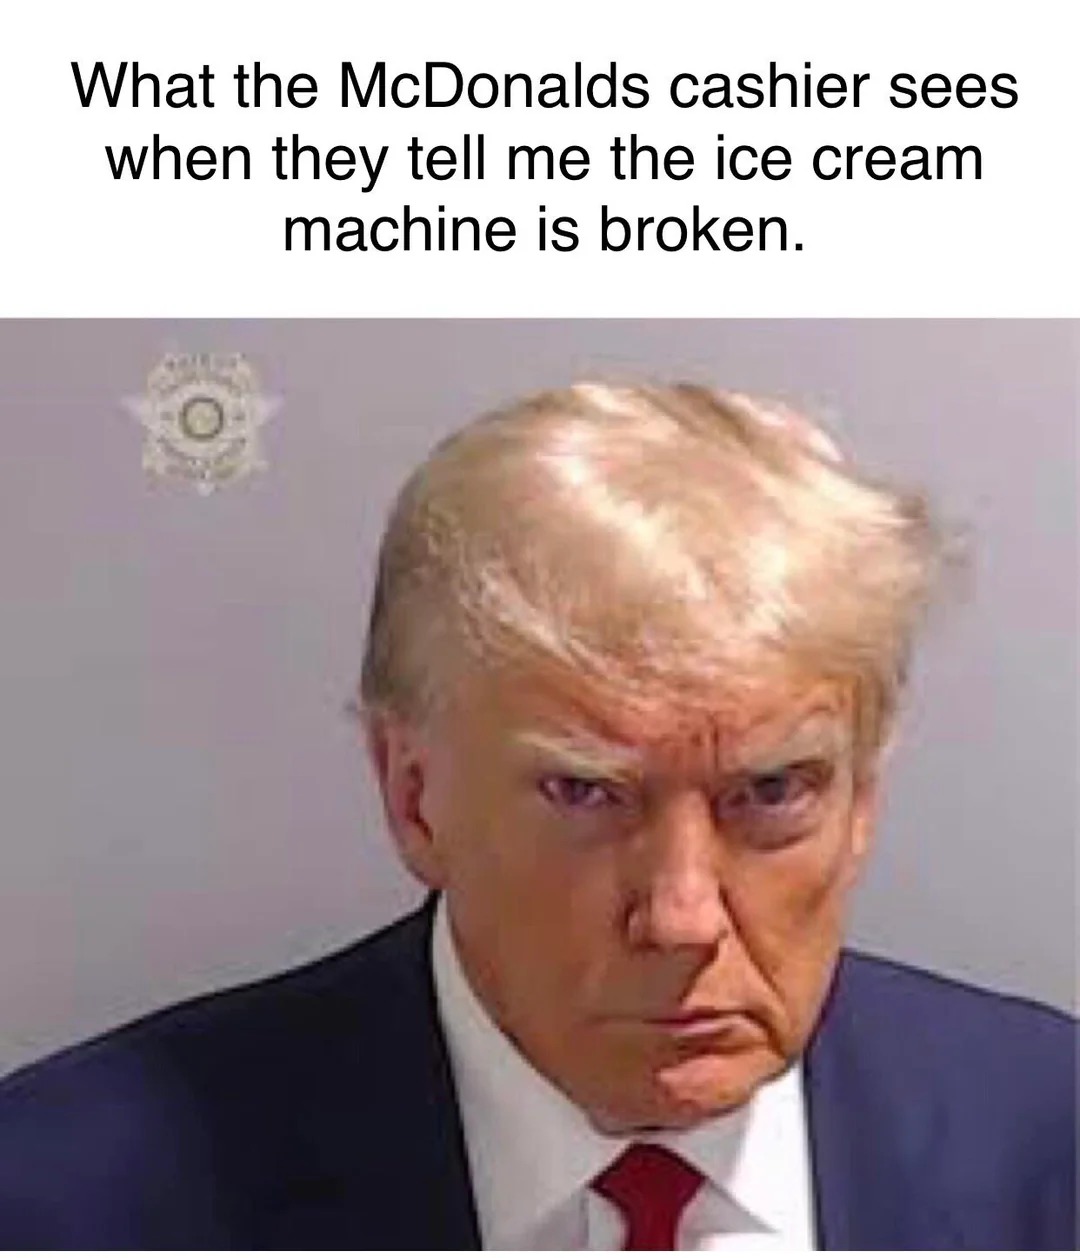 Another Trump mugshot meme